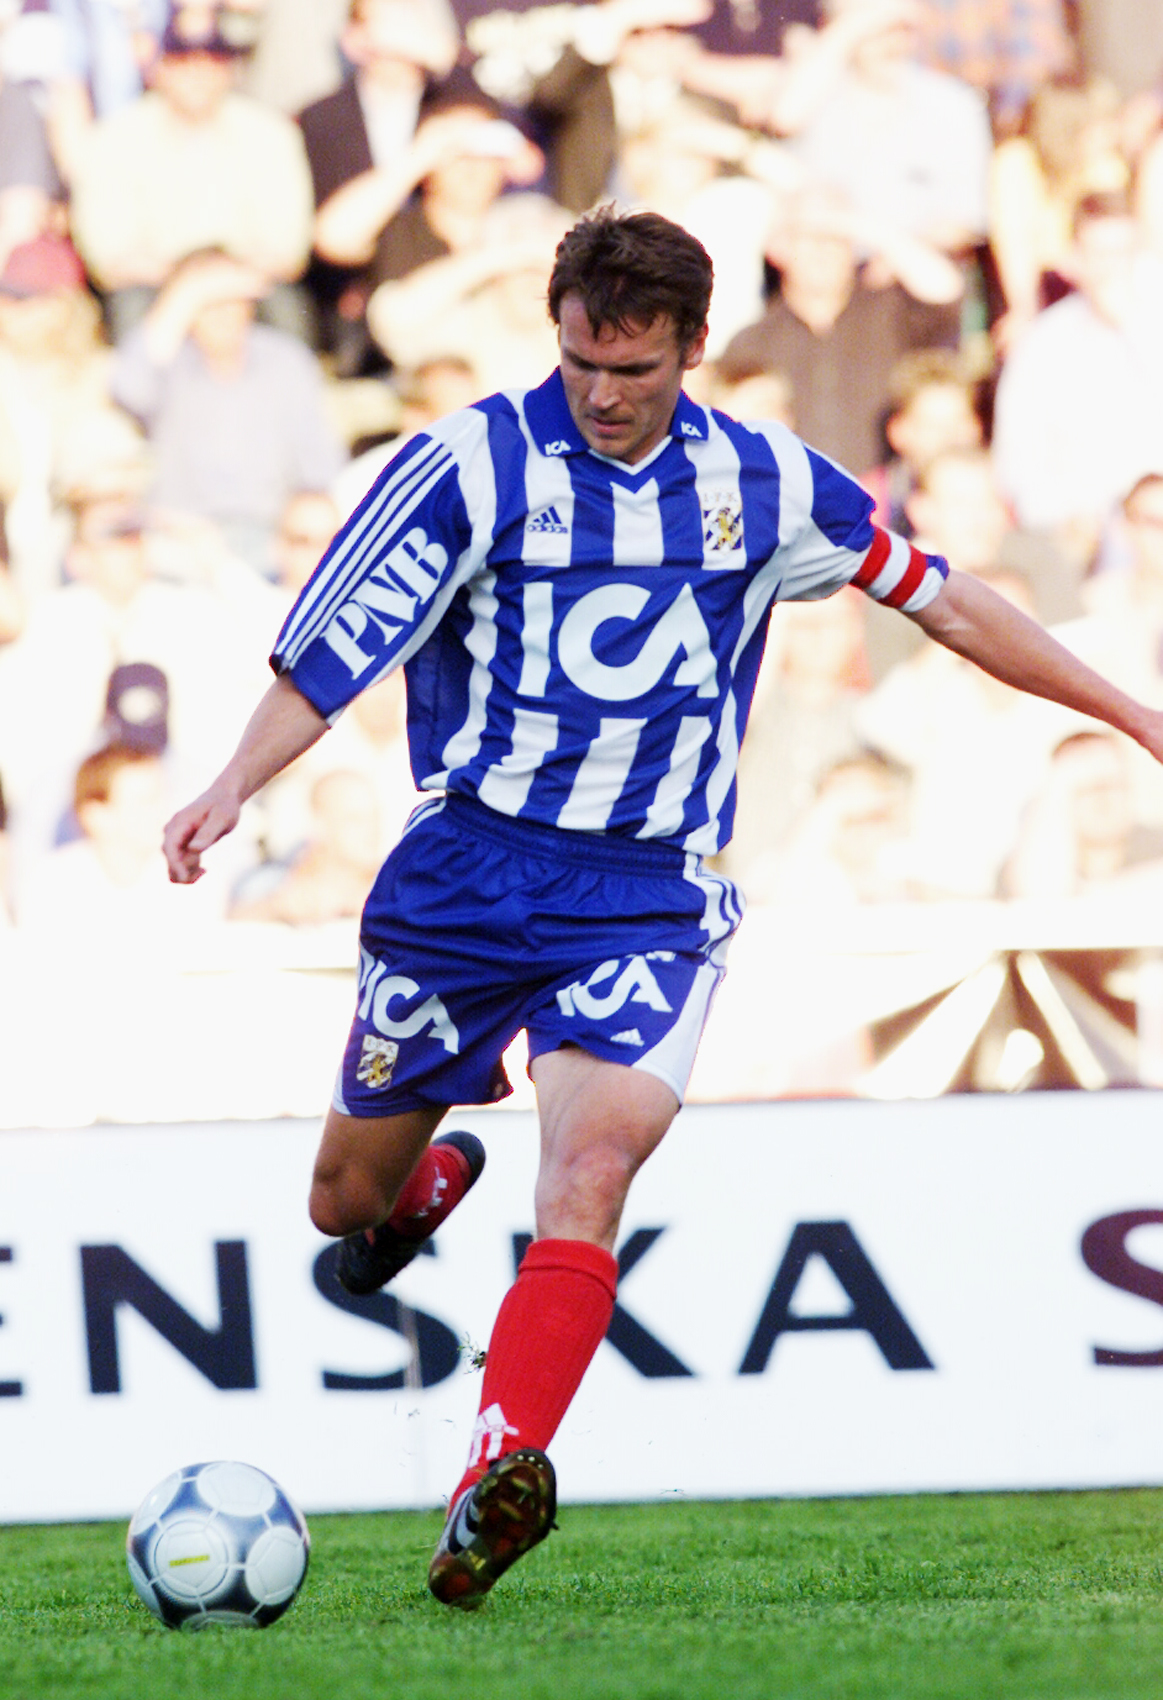 Magnus Erlingmark var trogen sin klubb. I elva år stannade han i IFK Göteborg.